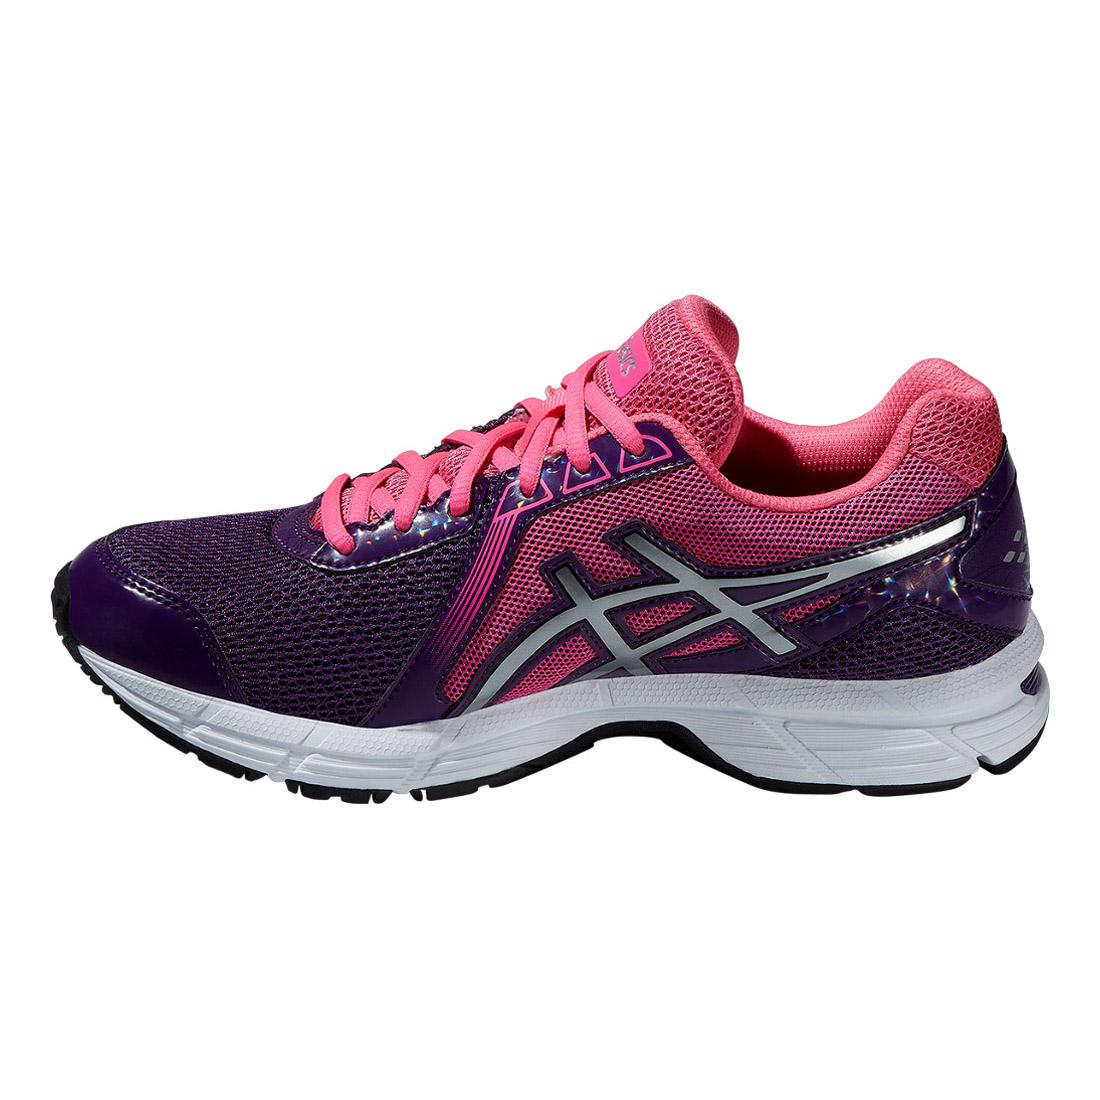 Asics Womens GEL-Impression 8 Running Shoes - Purple/Pink - www.paulmartinsmith.com